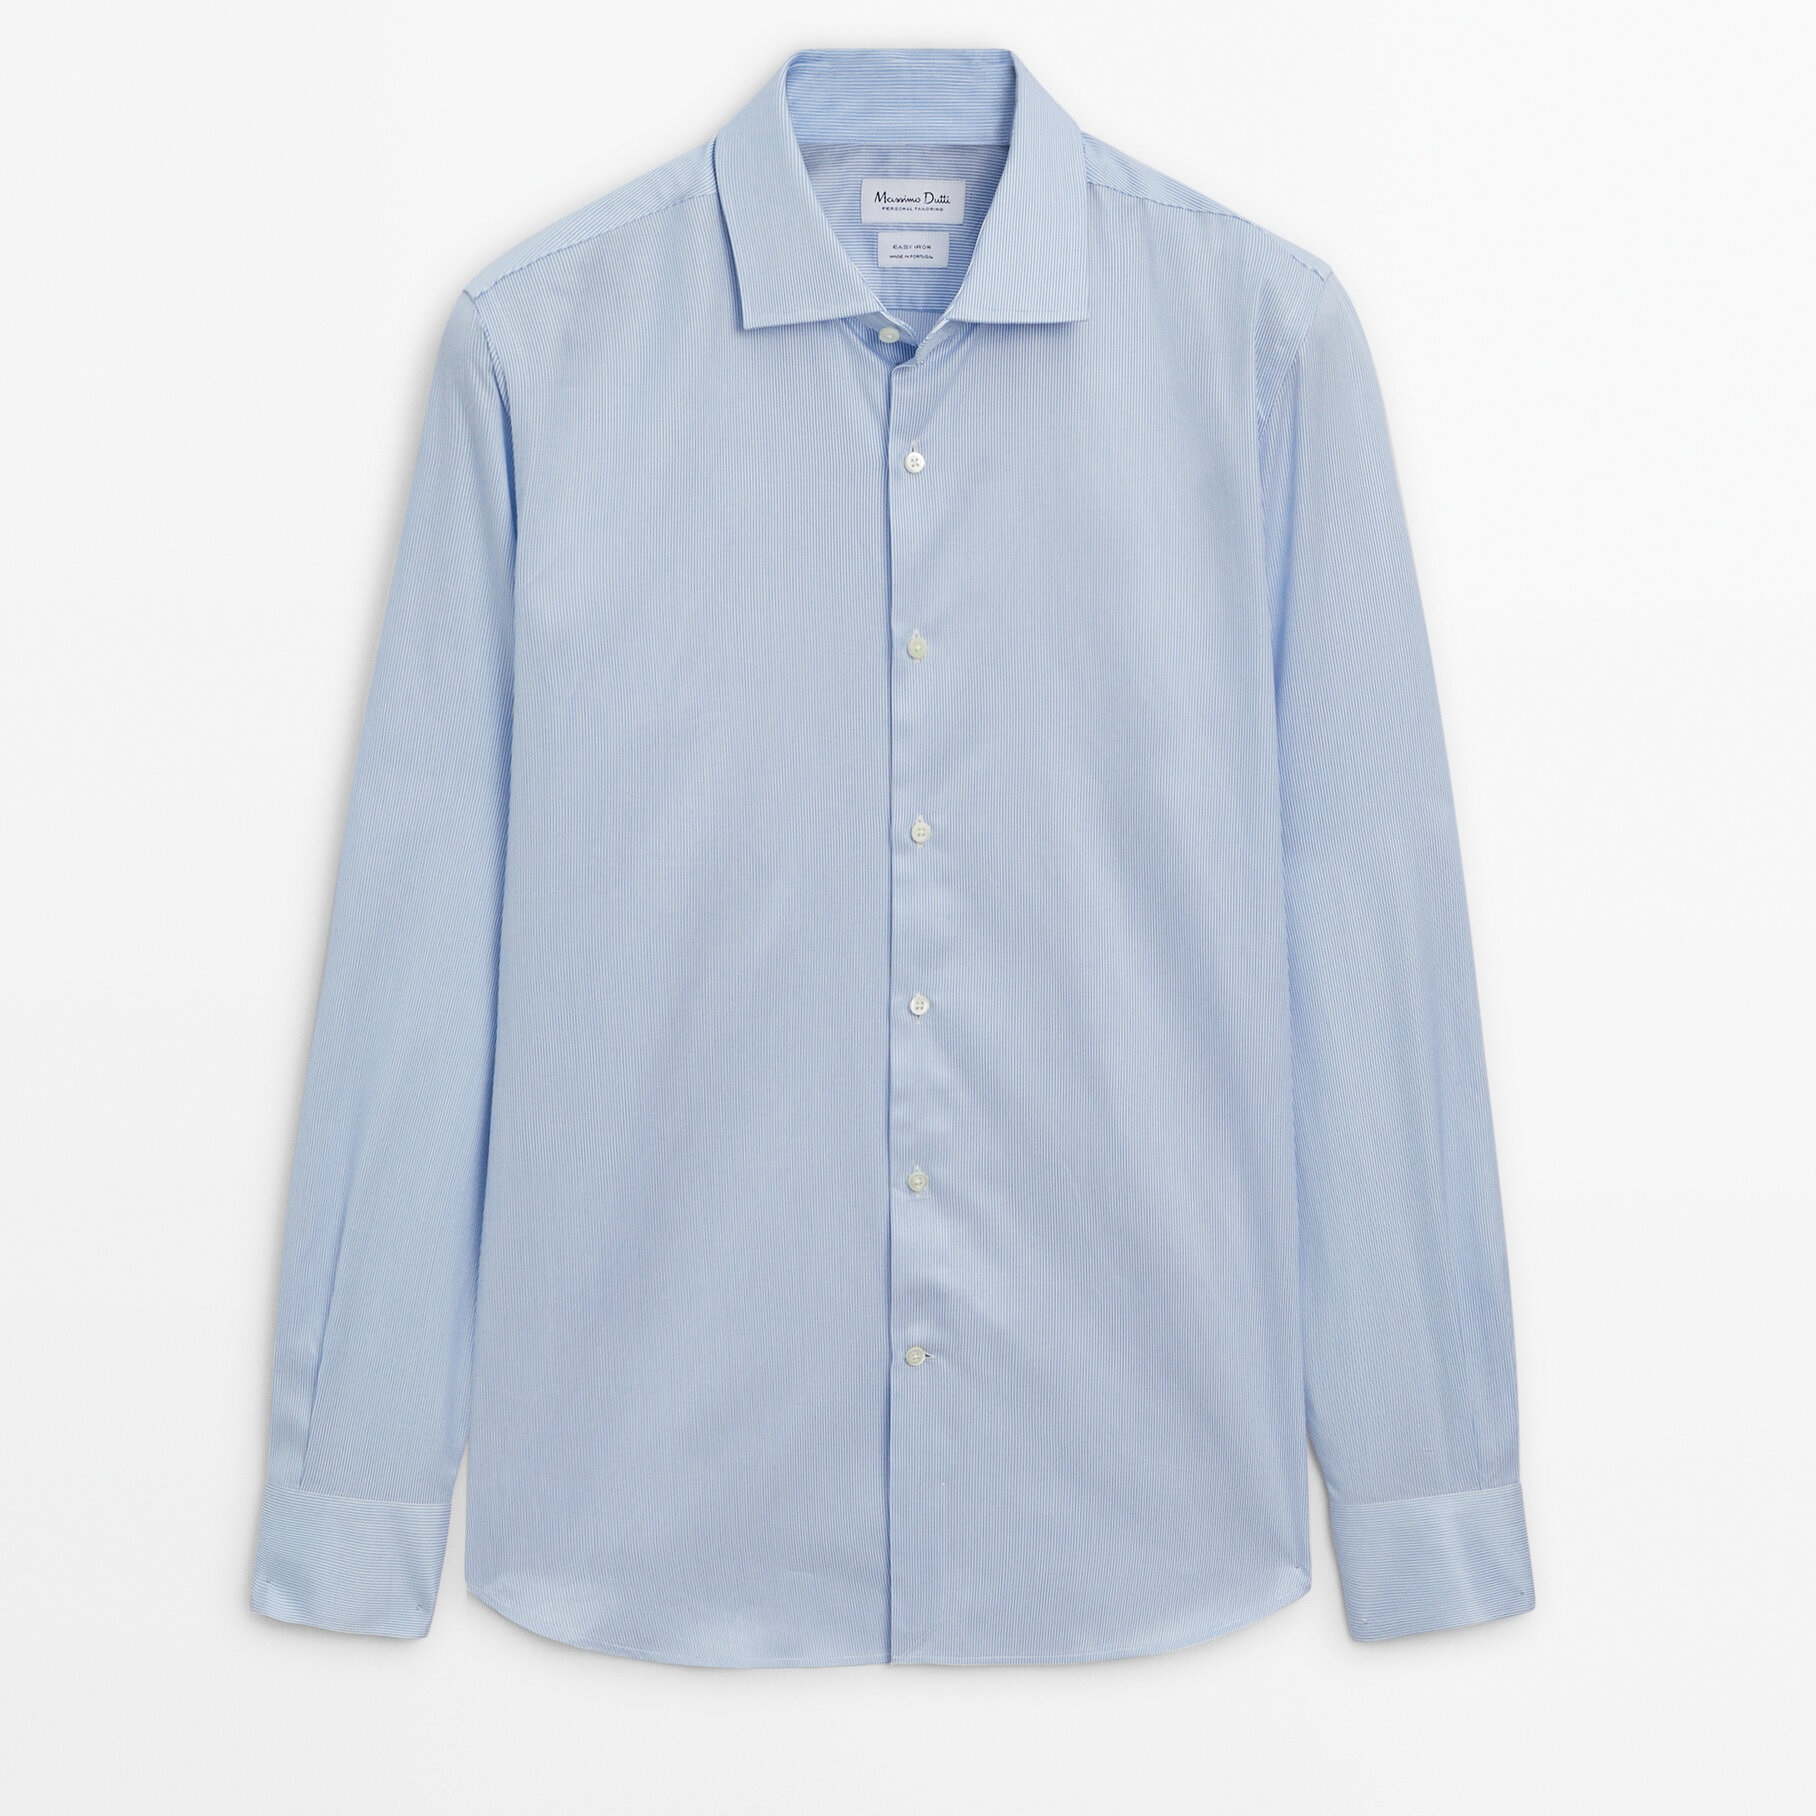 Рубашка Massimo Dutti Slim Fit Micro-striped, голубой рубашка massimo dutti slim fit micro striped oxford голубой